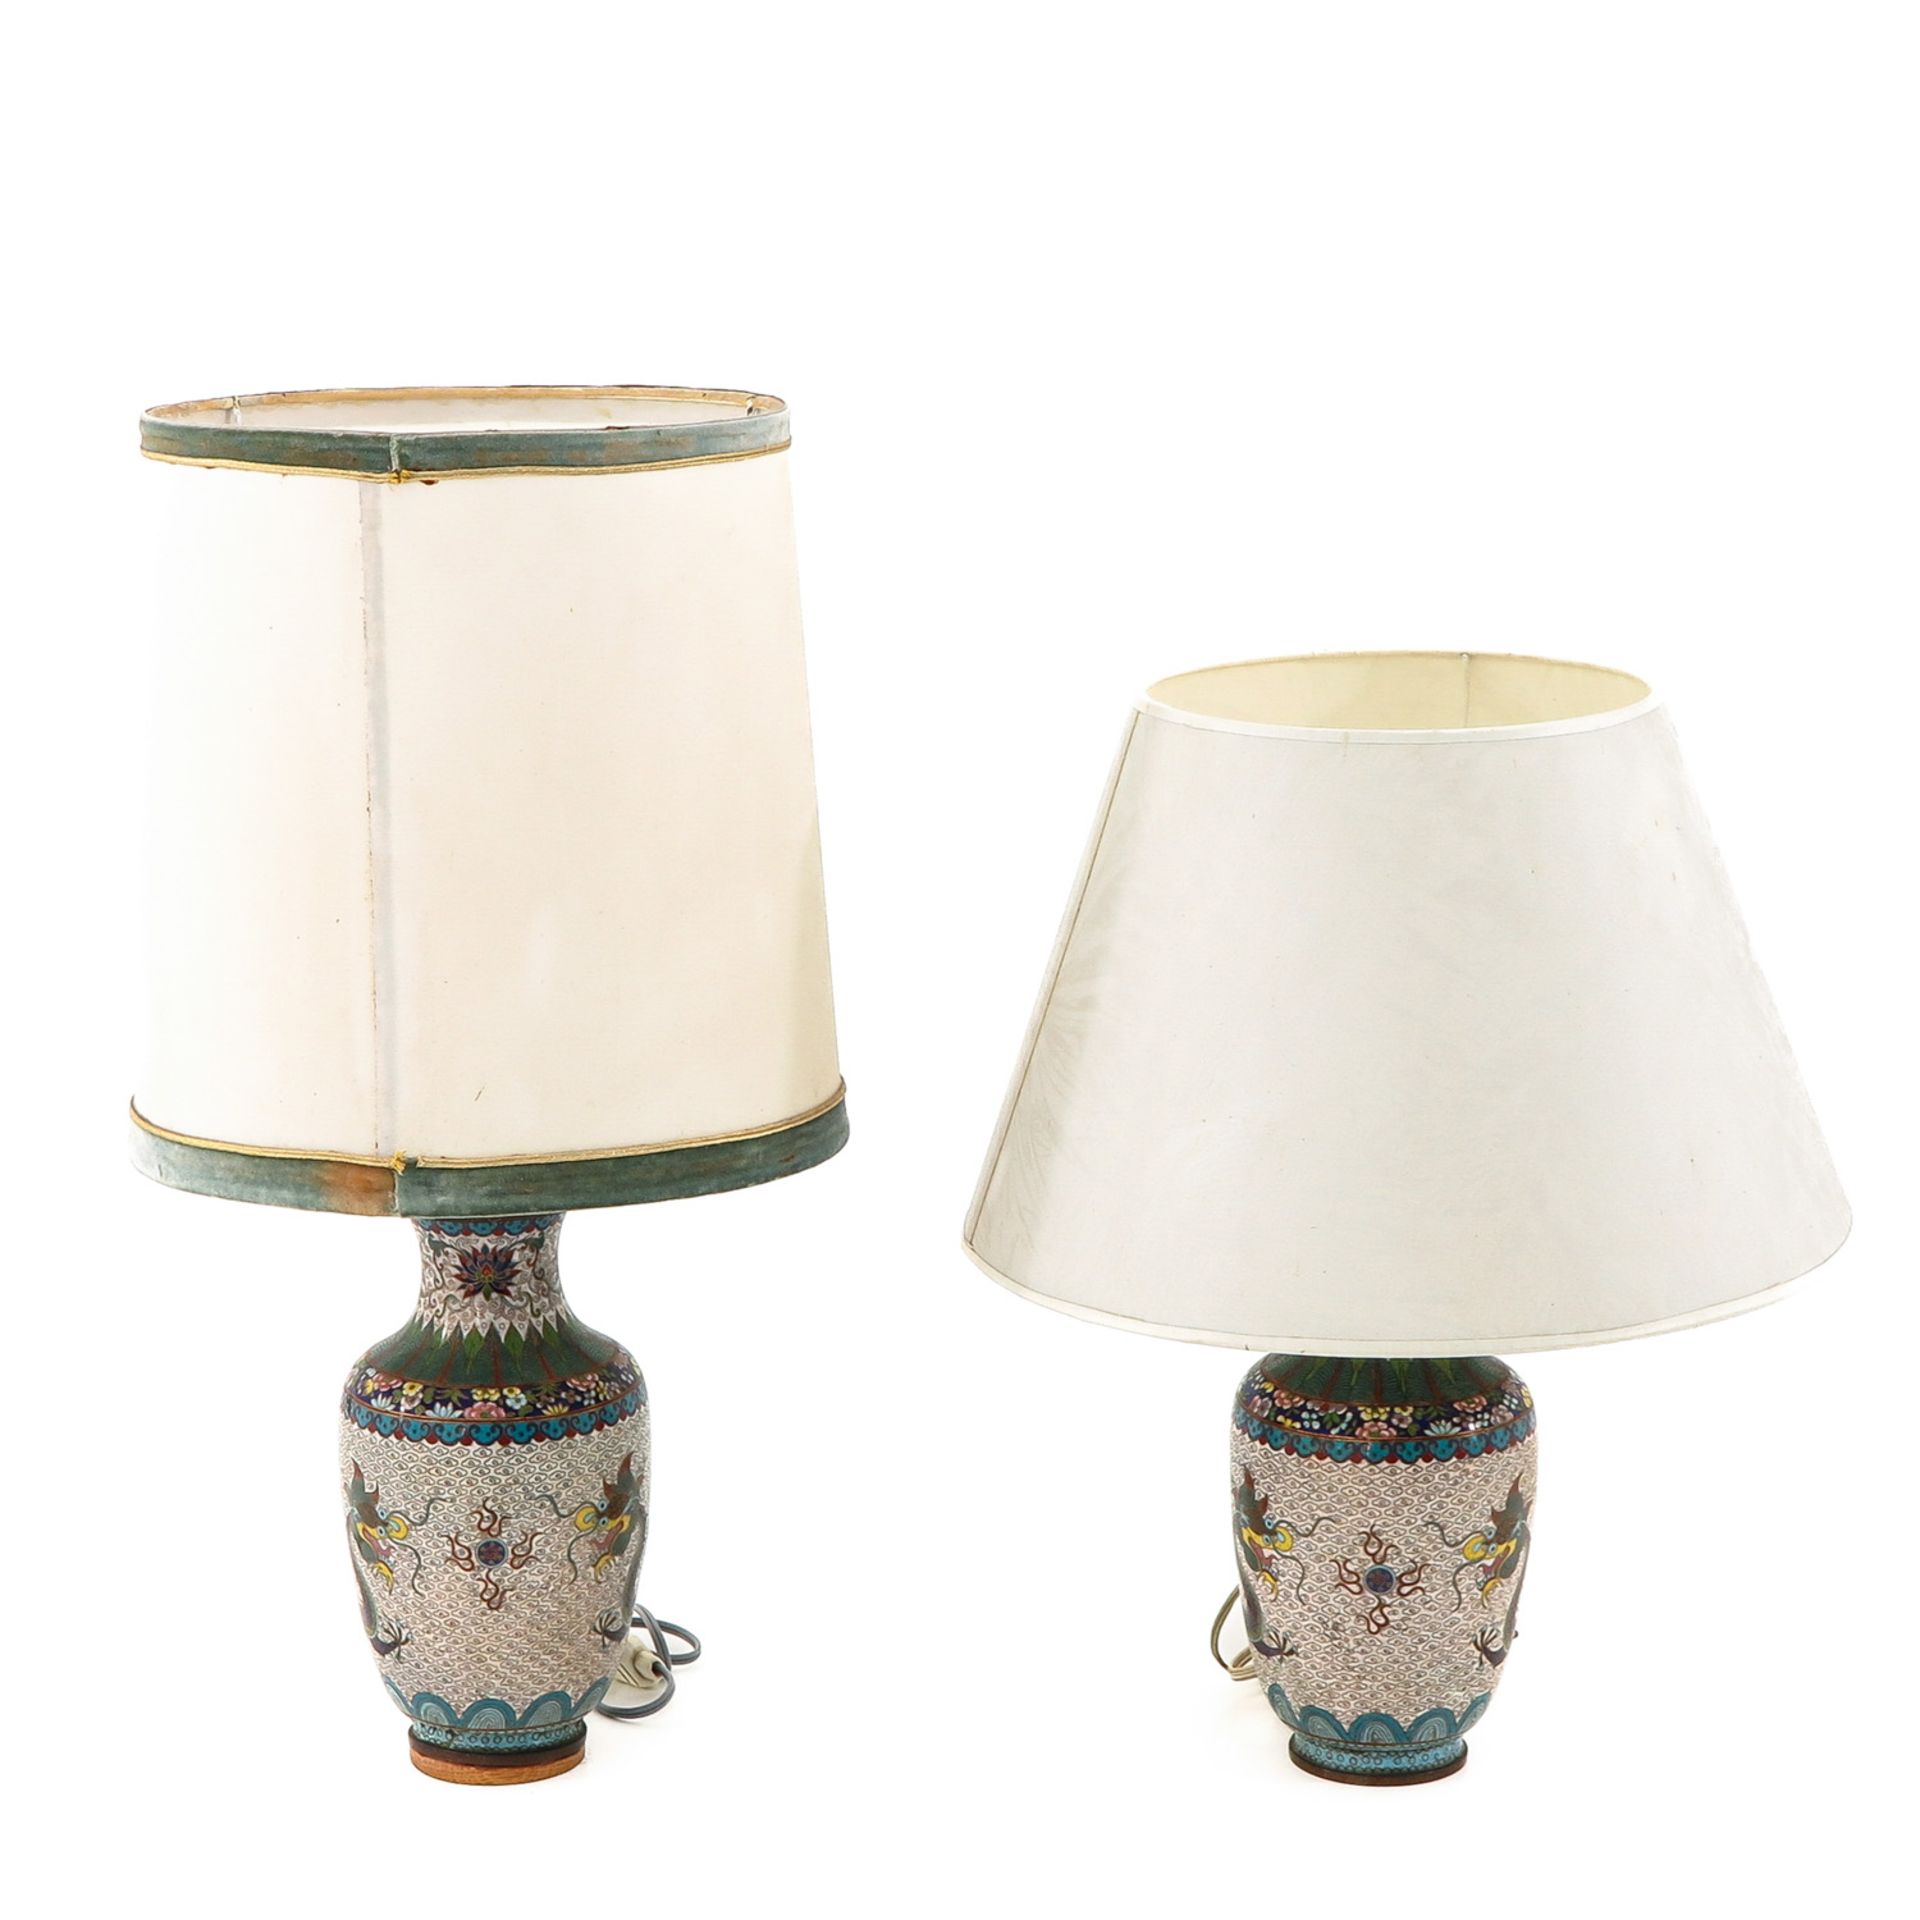 A Pair of Cloisonne Lamps